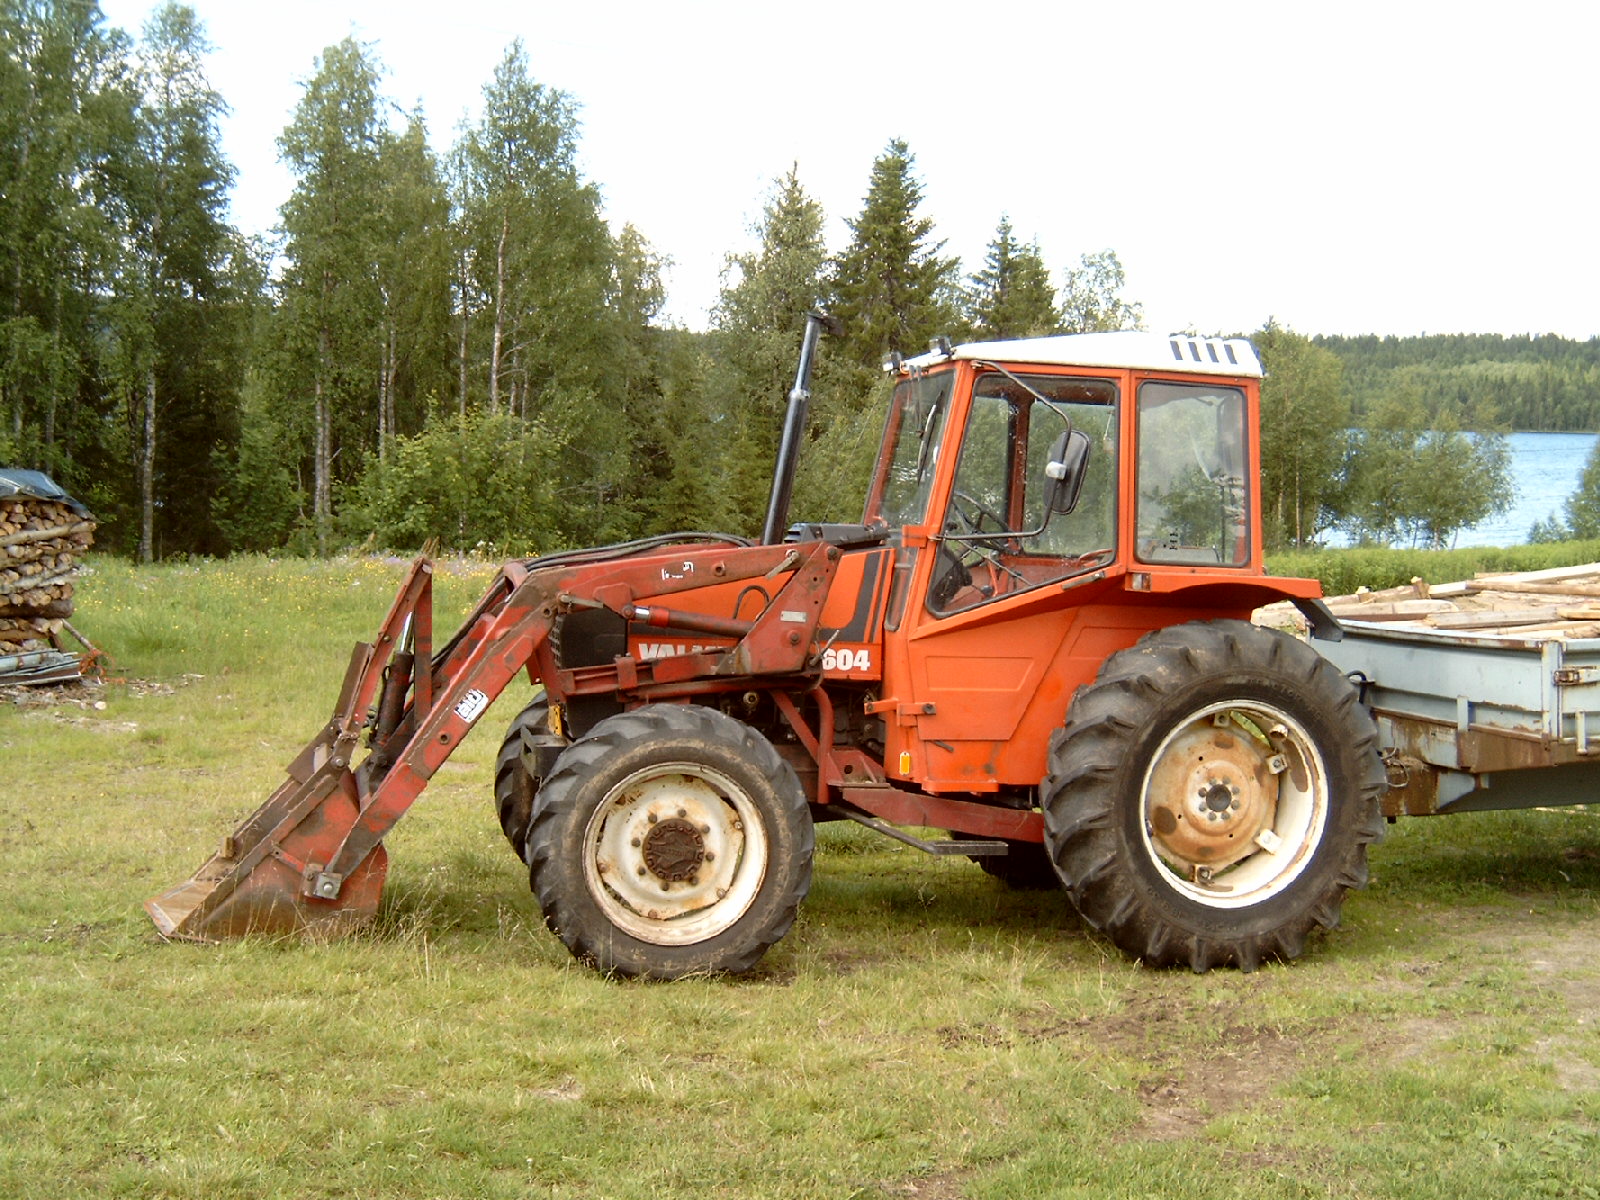 File:Valmet 604 4WD.jpg - Wikipedia, the free encyclopedia